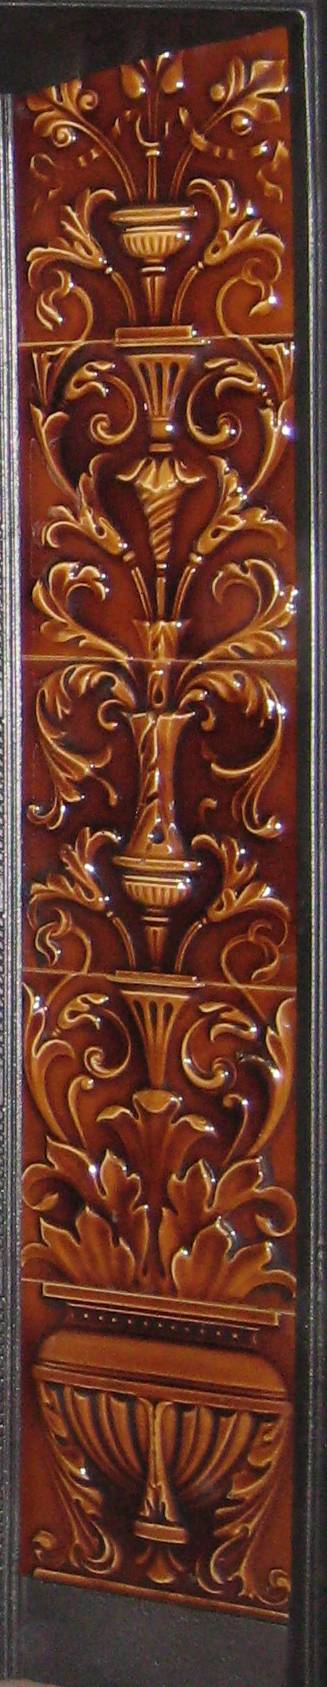 Buy Online: Antique Embossed Victorian Fireplace Tile Set